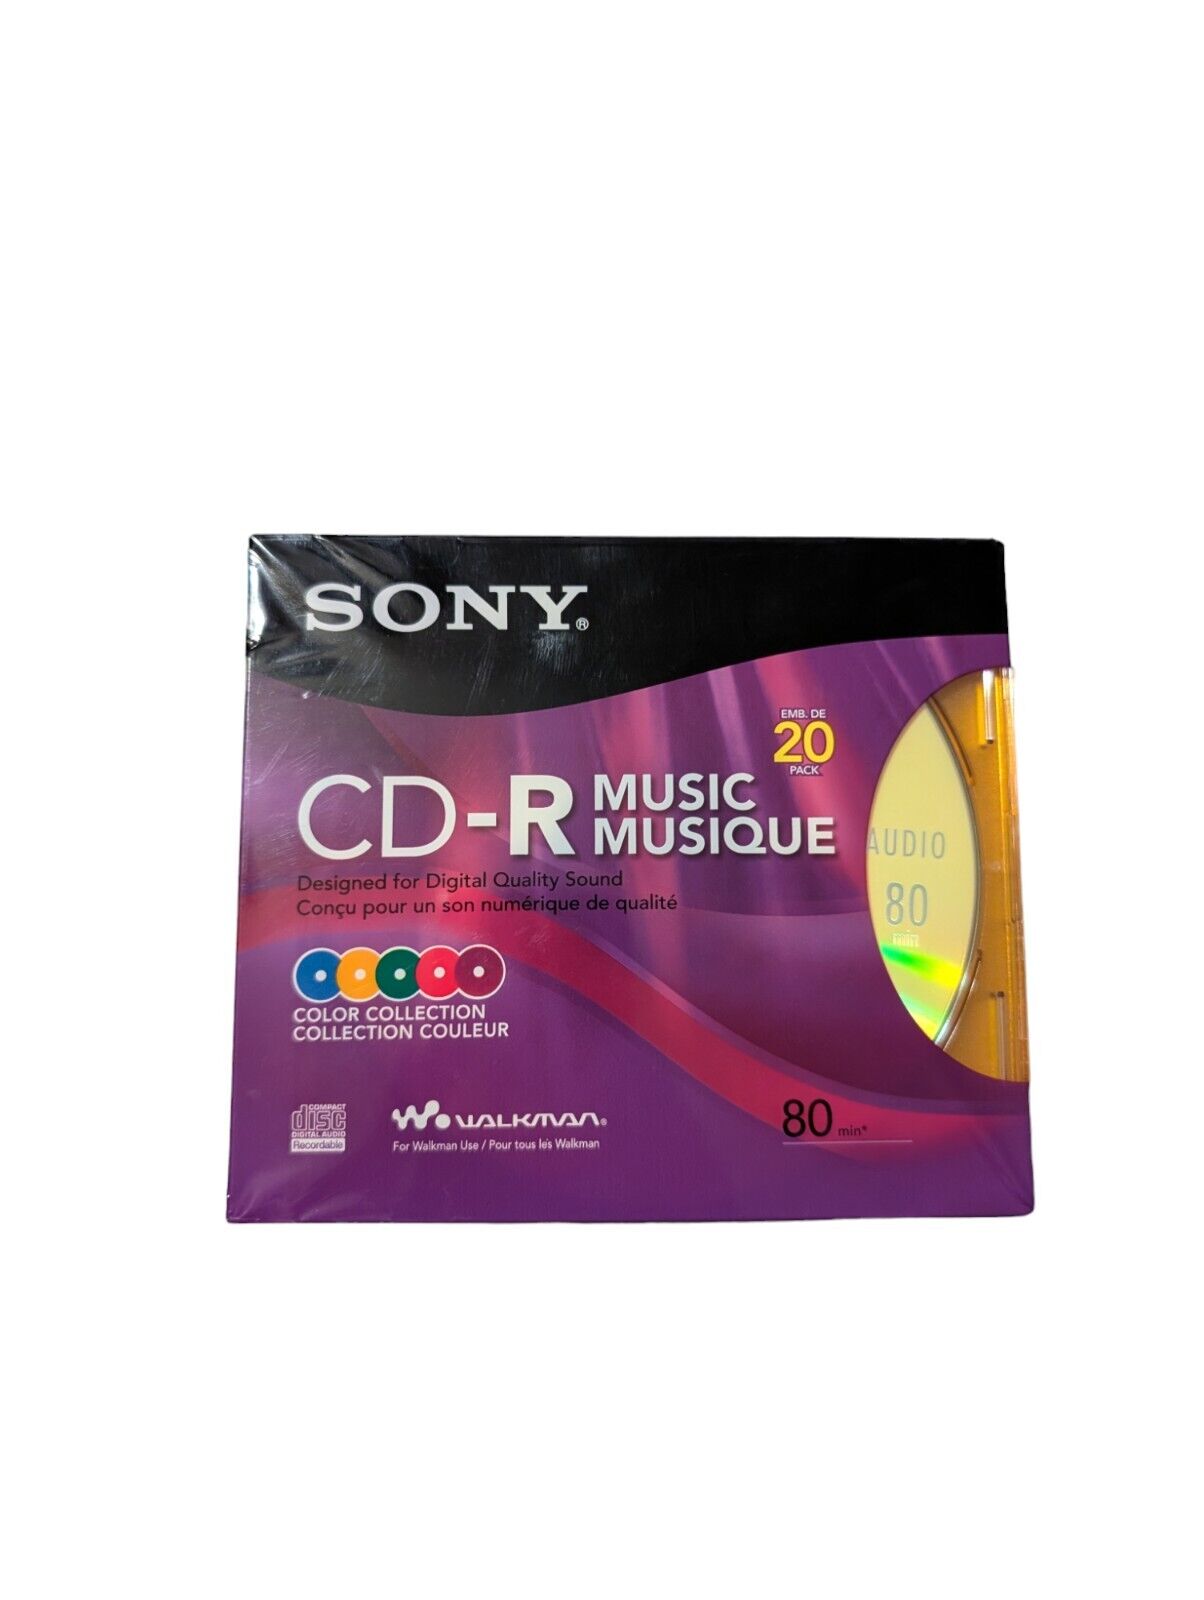 Sony CD-R Music CDs 20 Pack Slim Color Jewel Cases 80 Min 20CRM80LX2 Walkman 